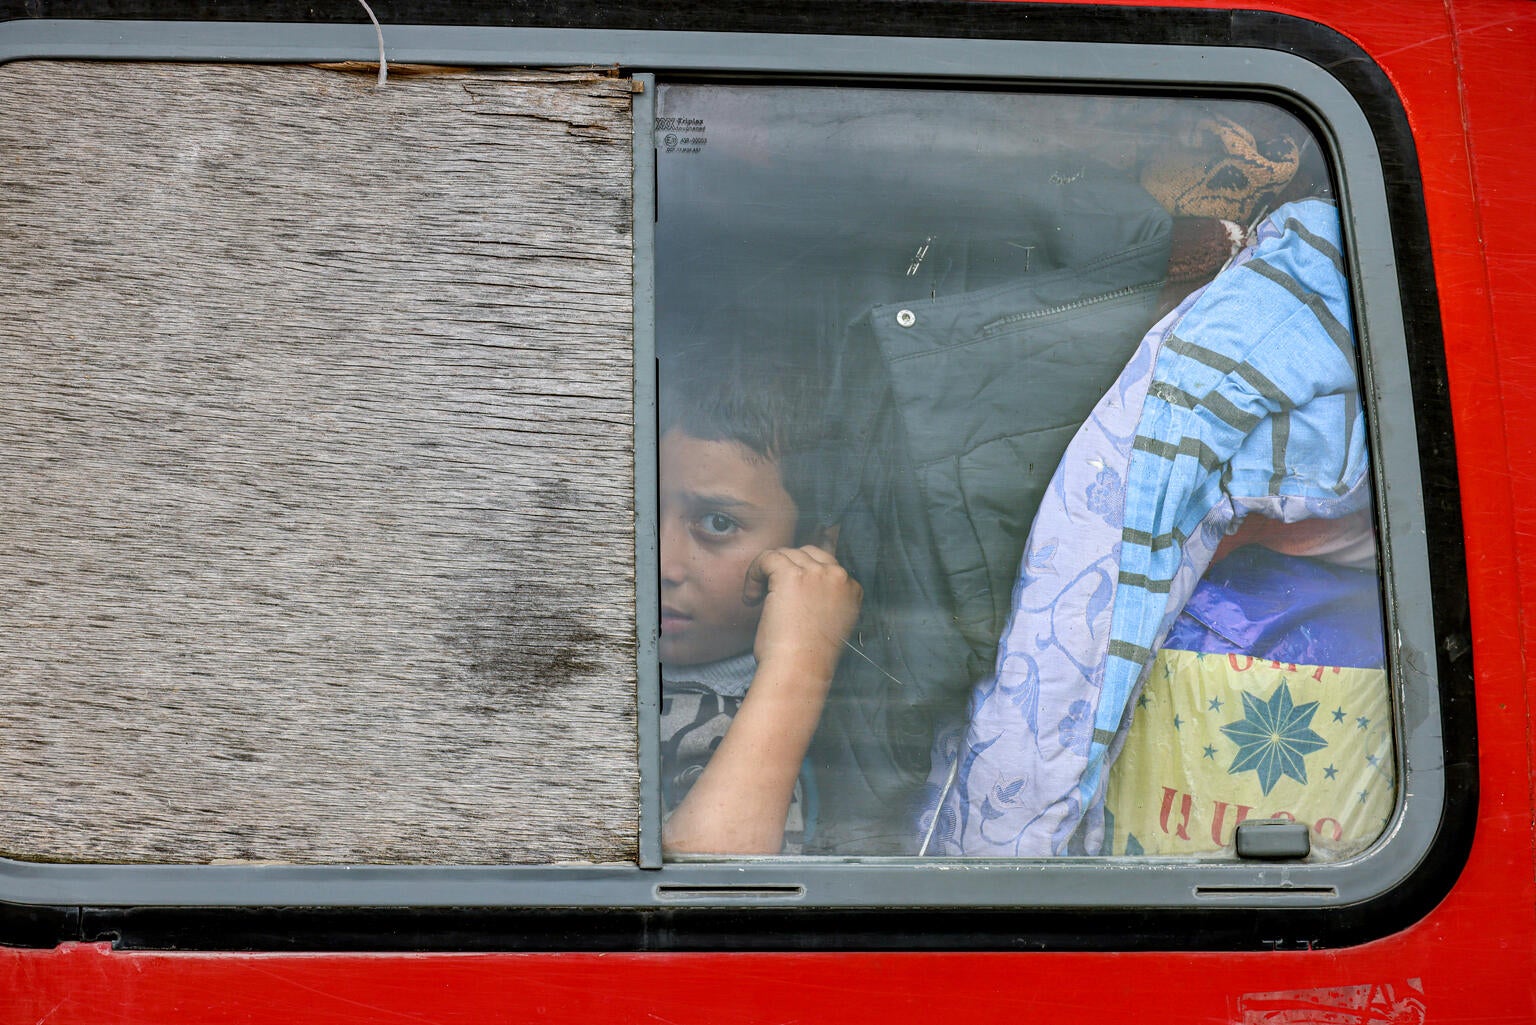 Armenian children fleeing the recent hostilities in Karabakh region 